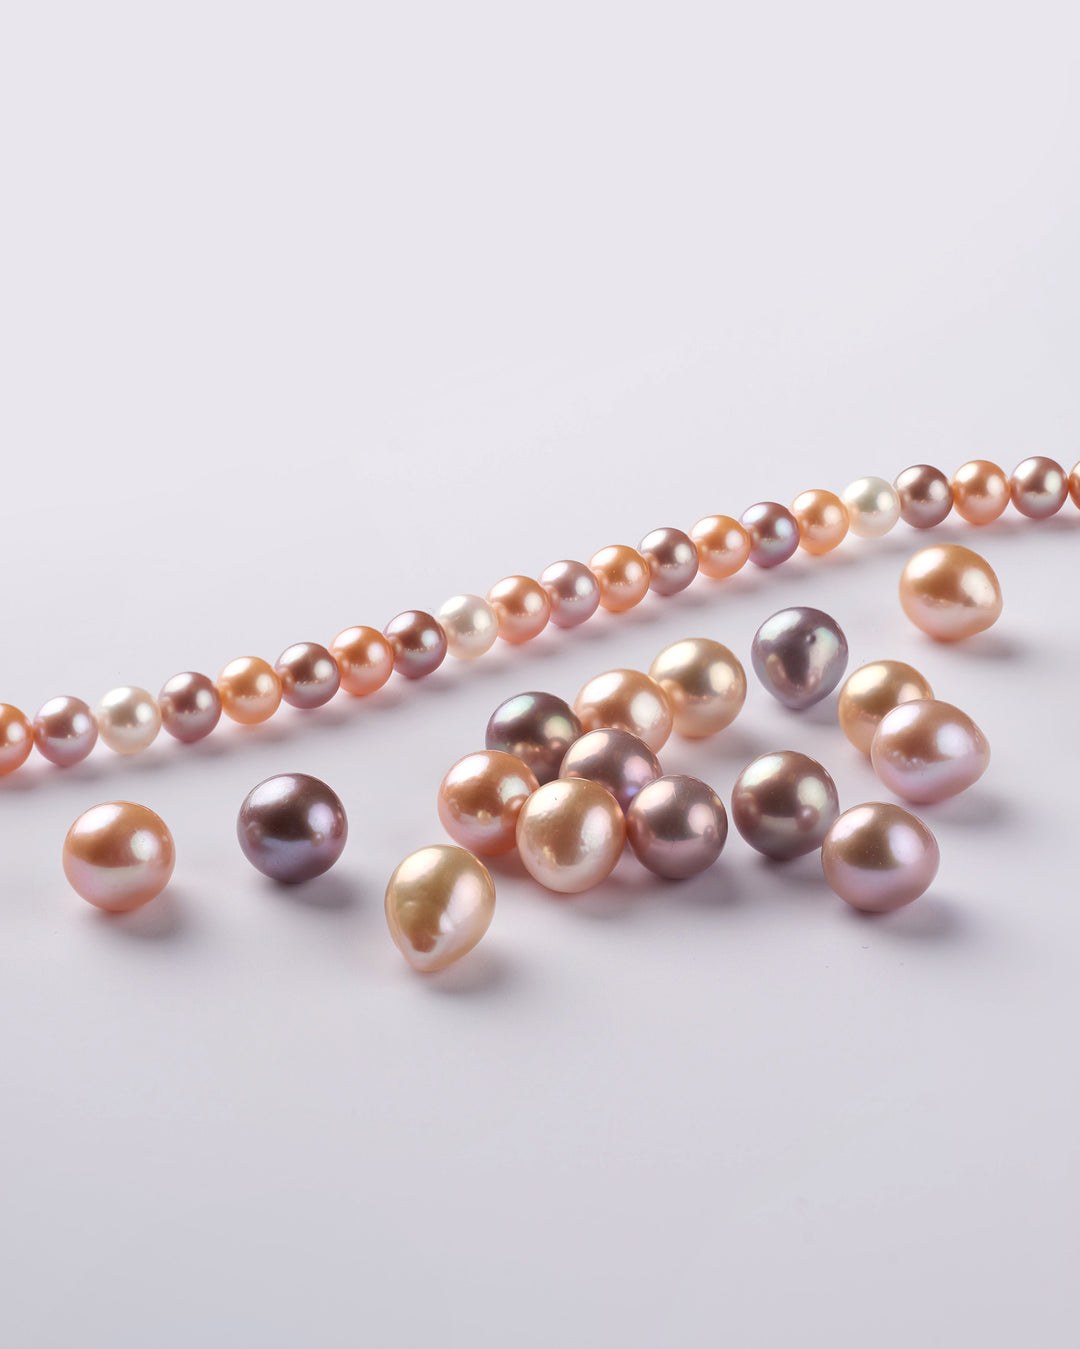 Dark, natural-color freshwater pearls in multicolored tones